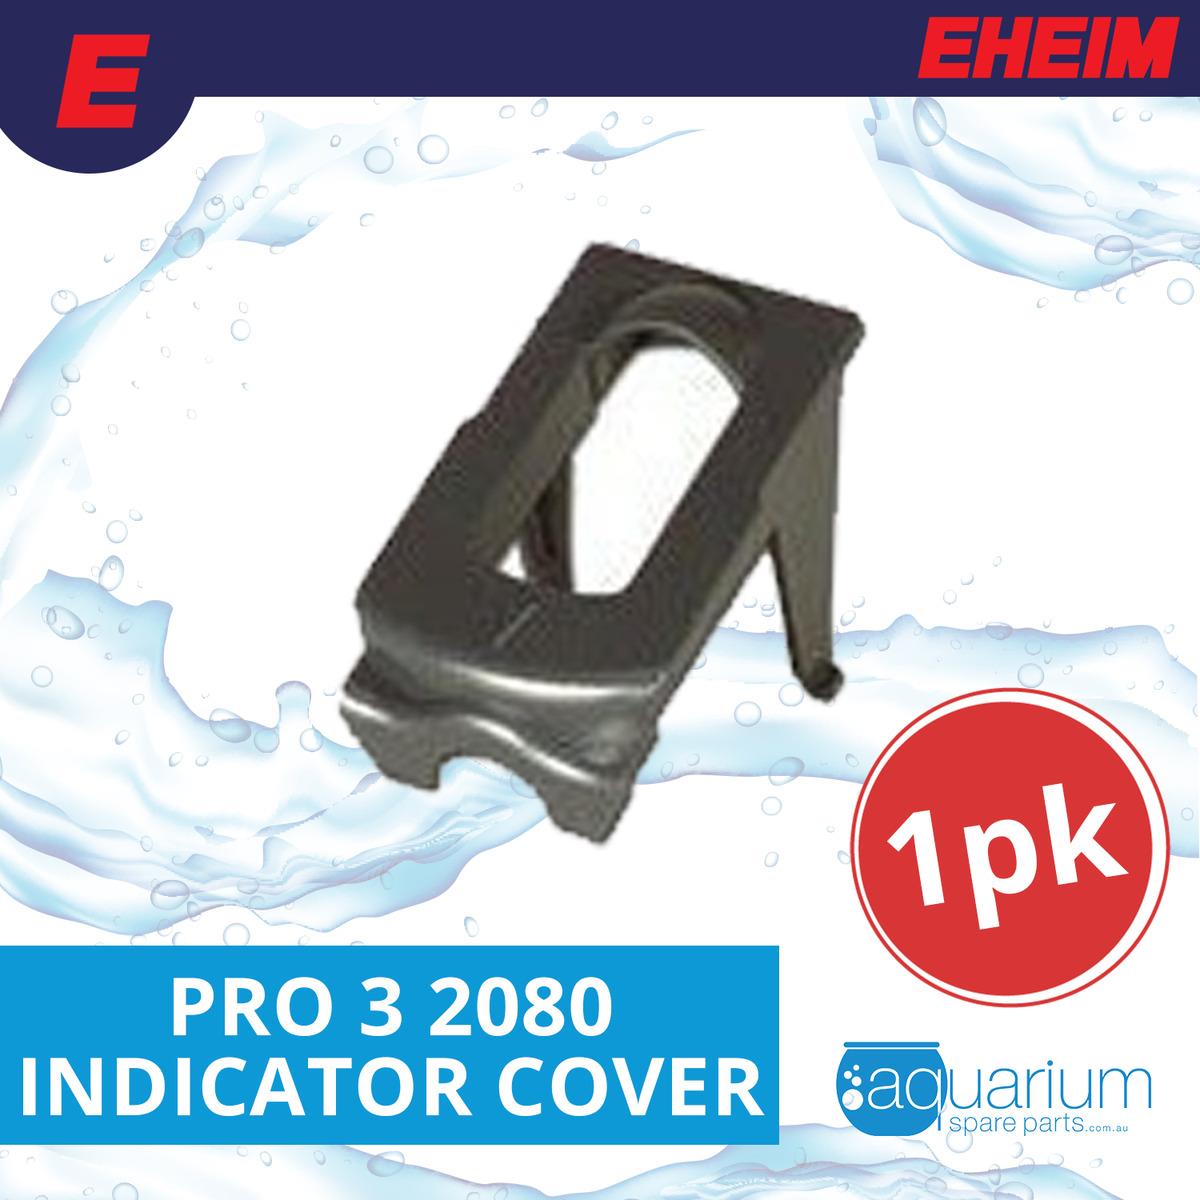 Eheim Pro 3 2080 Indicator Cover (7209208)